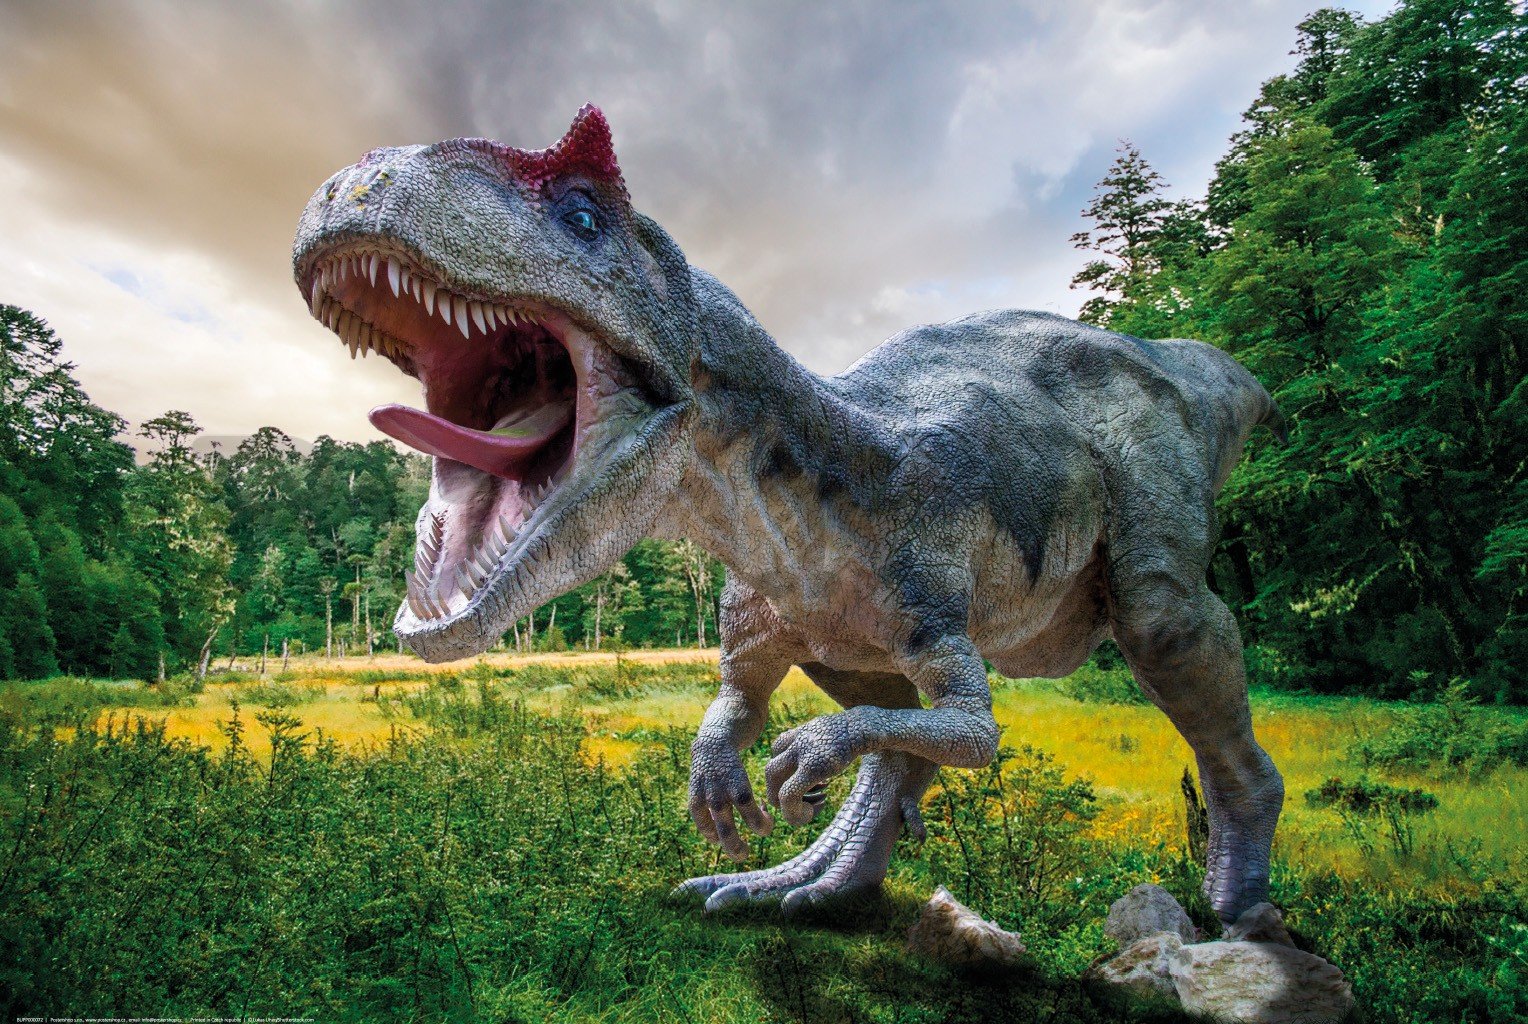 Poster: Angry tyrannosaurus